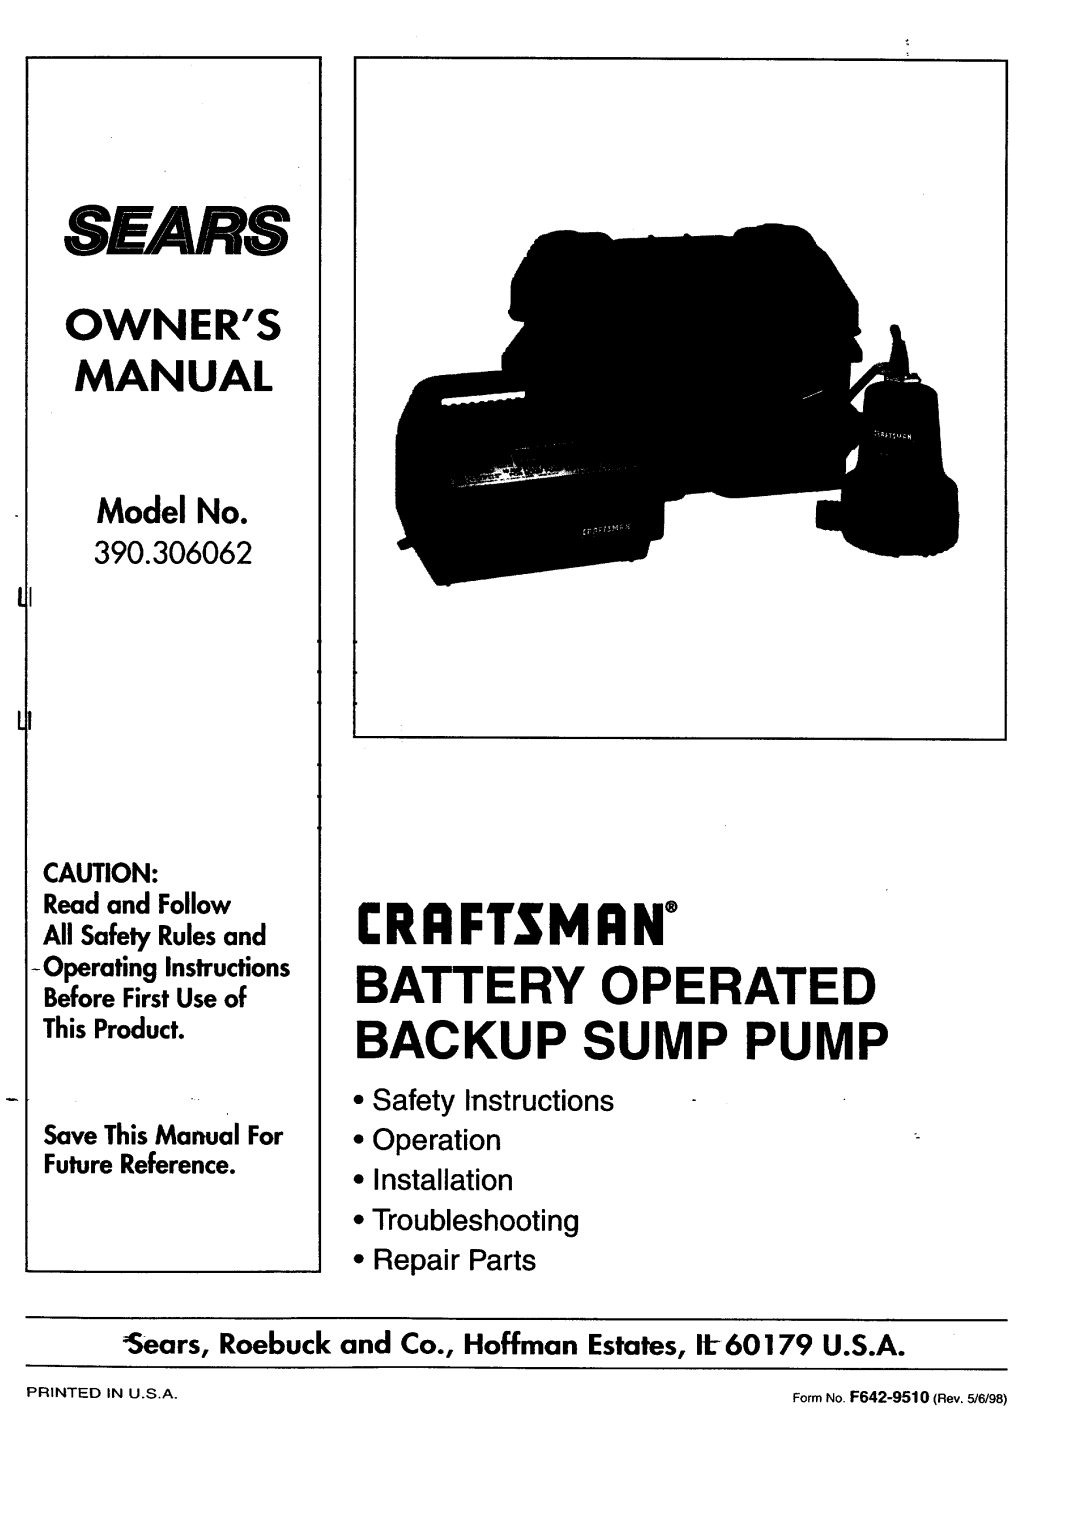 Sears 390.306062 owner manual Battery Operated Backup Sump Pump, Owners Manual, Model No, BeforeFirstUseof ThisProduct 